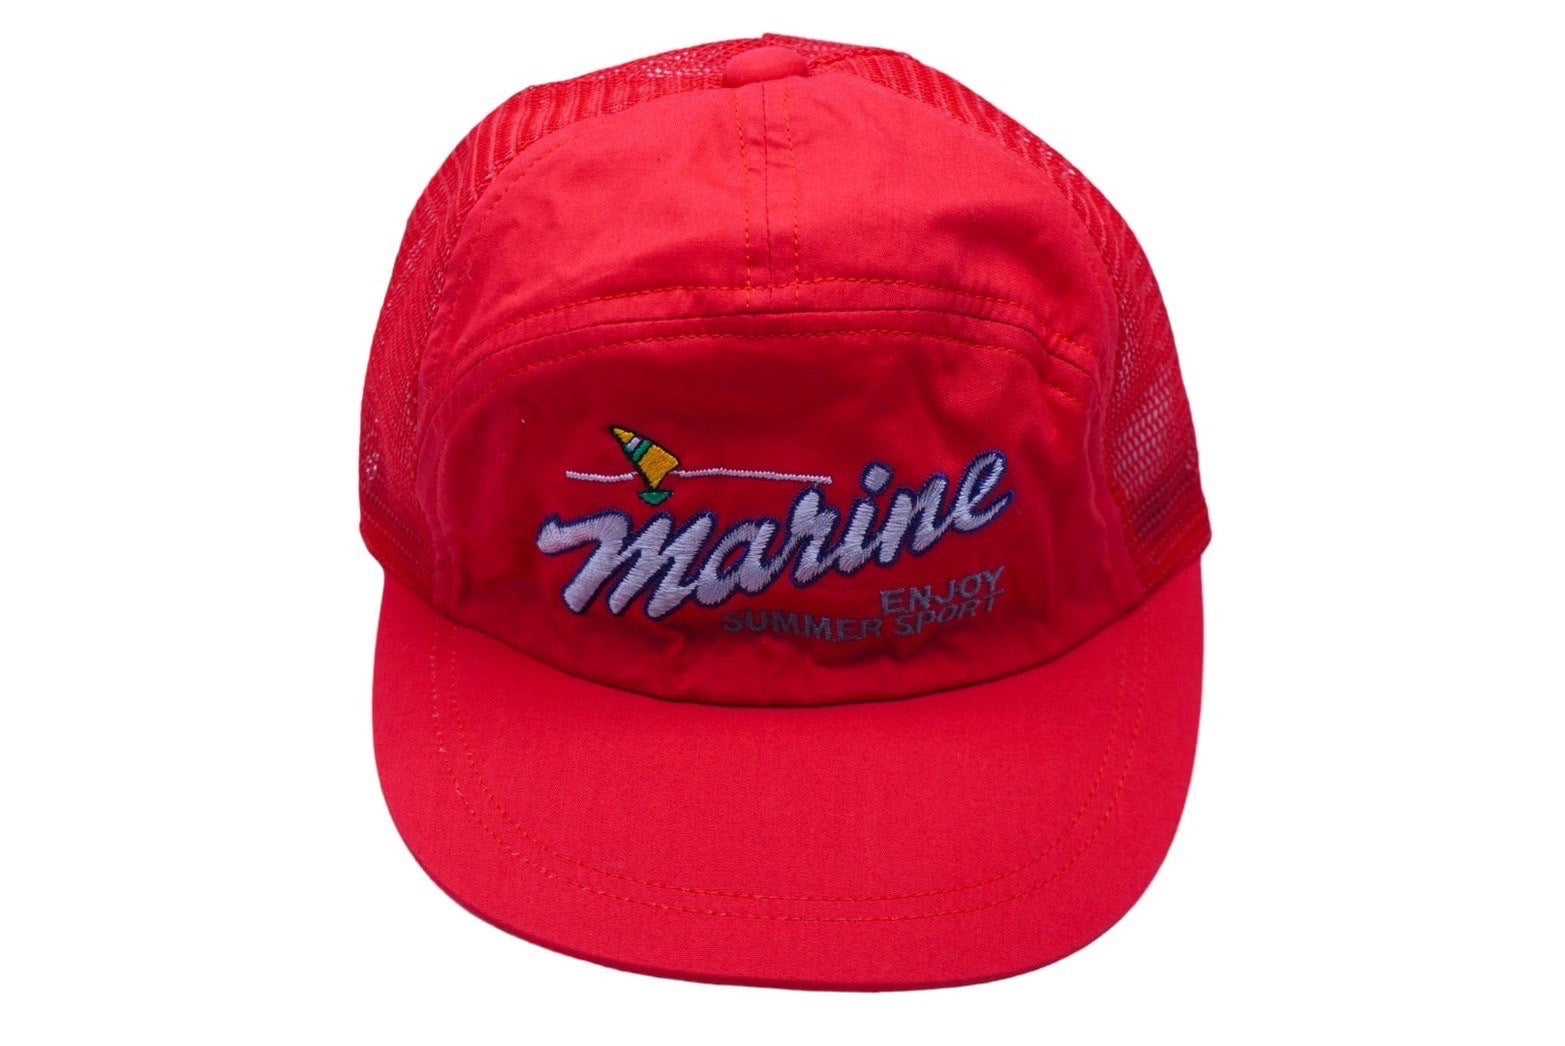 marine ENJOY SUMMER SPORT メッシュ キャップ レッド 帽子 刺繍 赤 ...